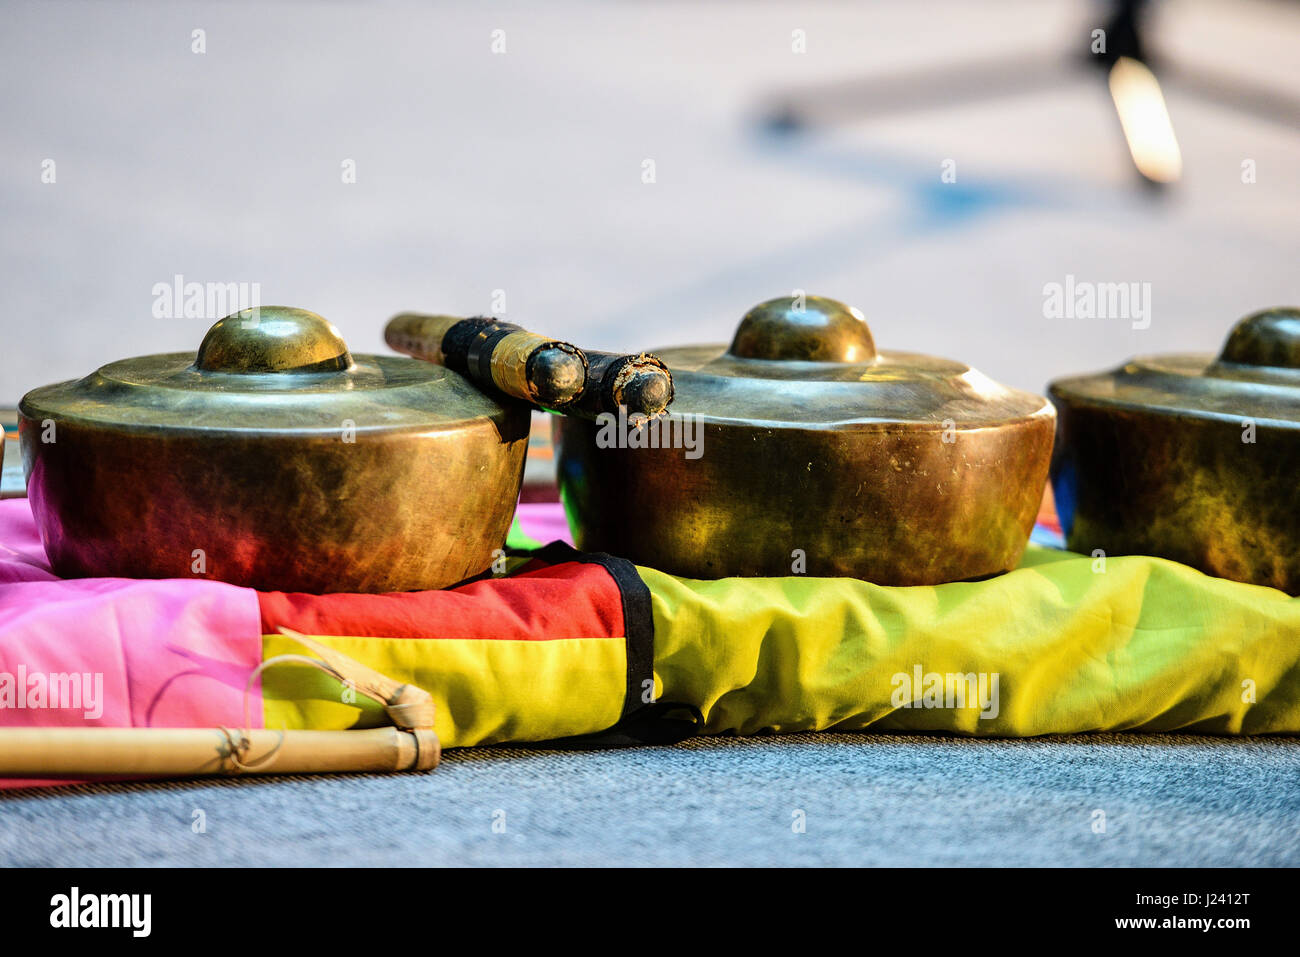 Indonesiano folk antichi strumenti musicali. Fotografia di close-up. Foto Stock